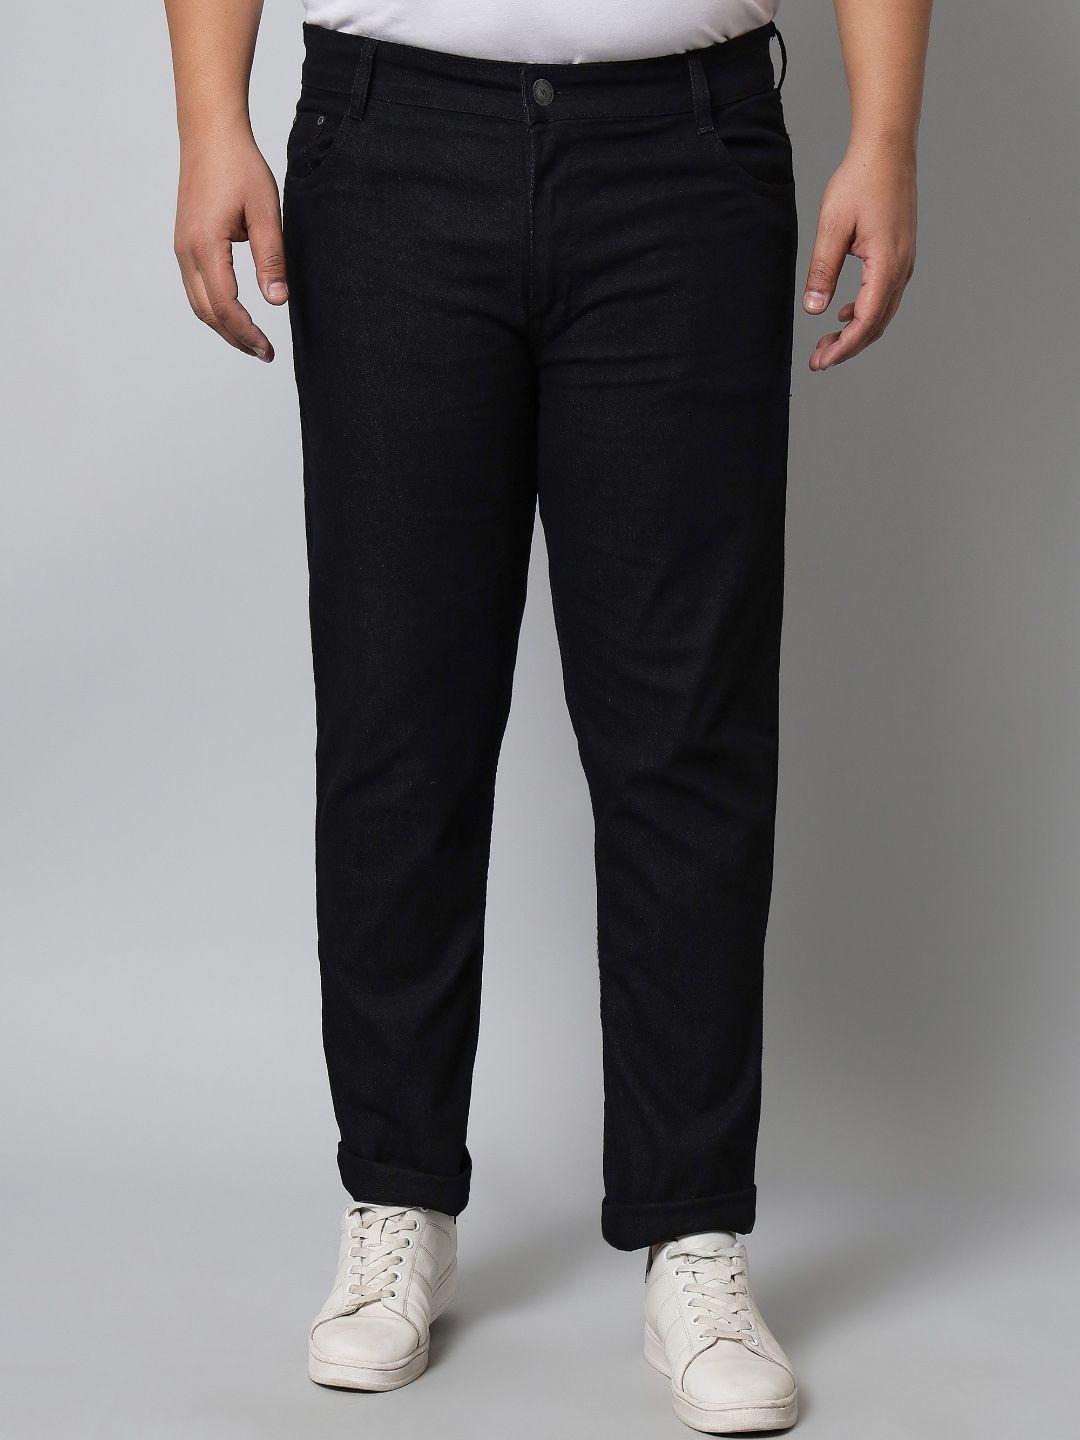 STUDIO NEXX Men Plus Size Slim Fit Mid-Rise Clean Look Jeans